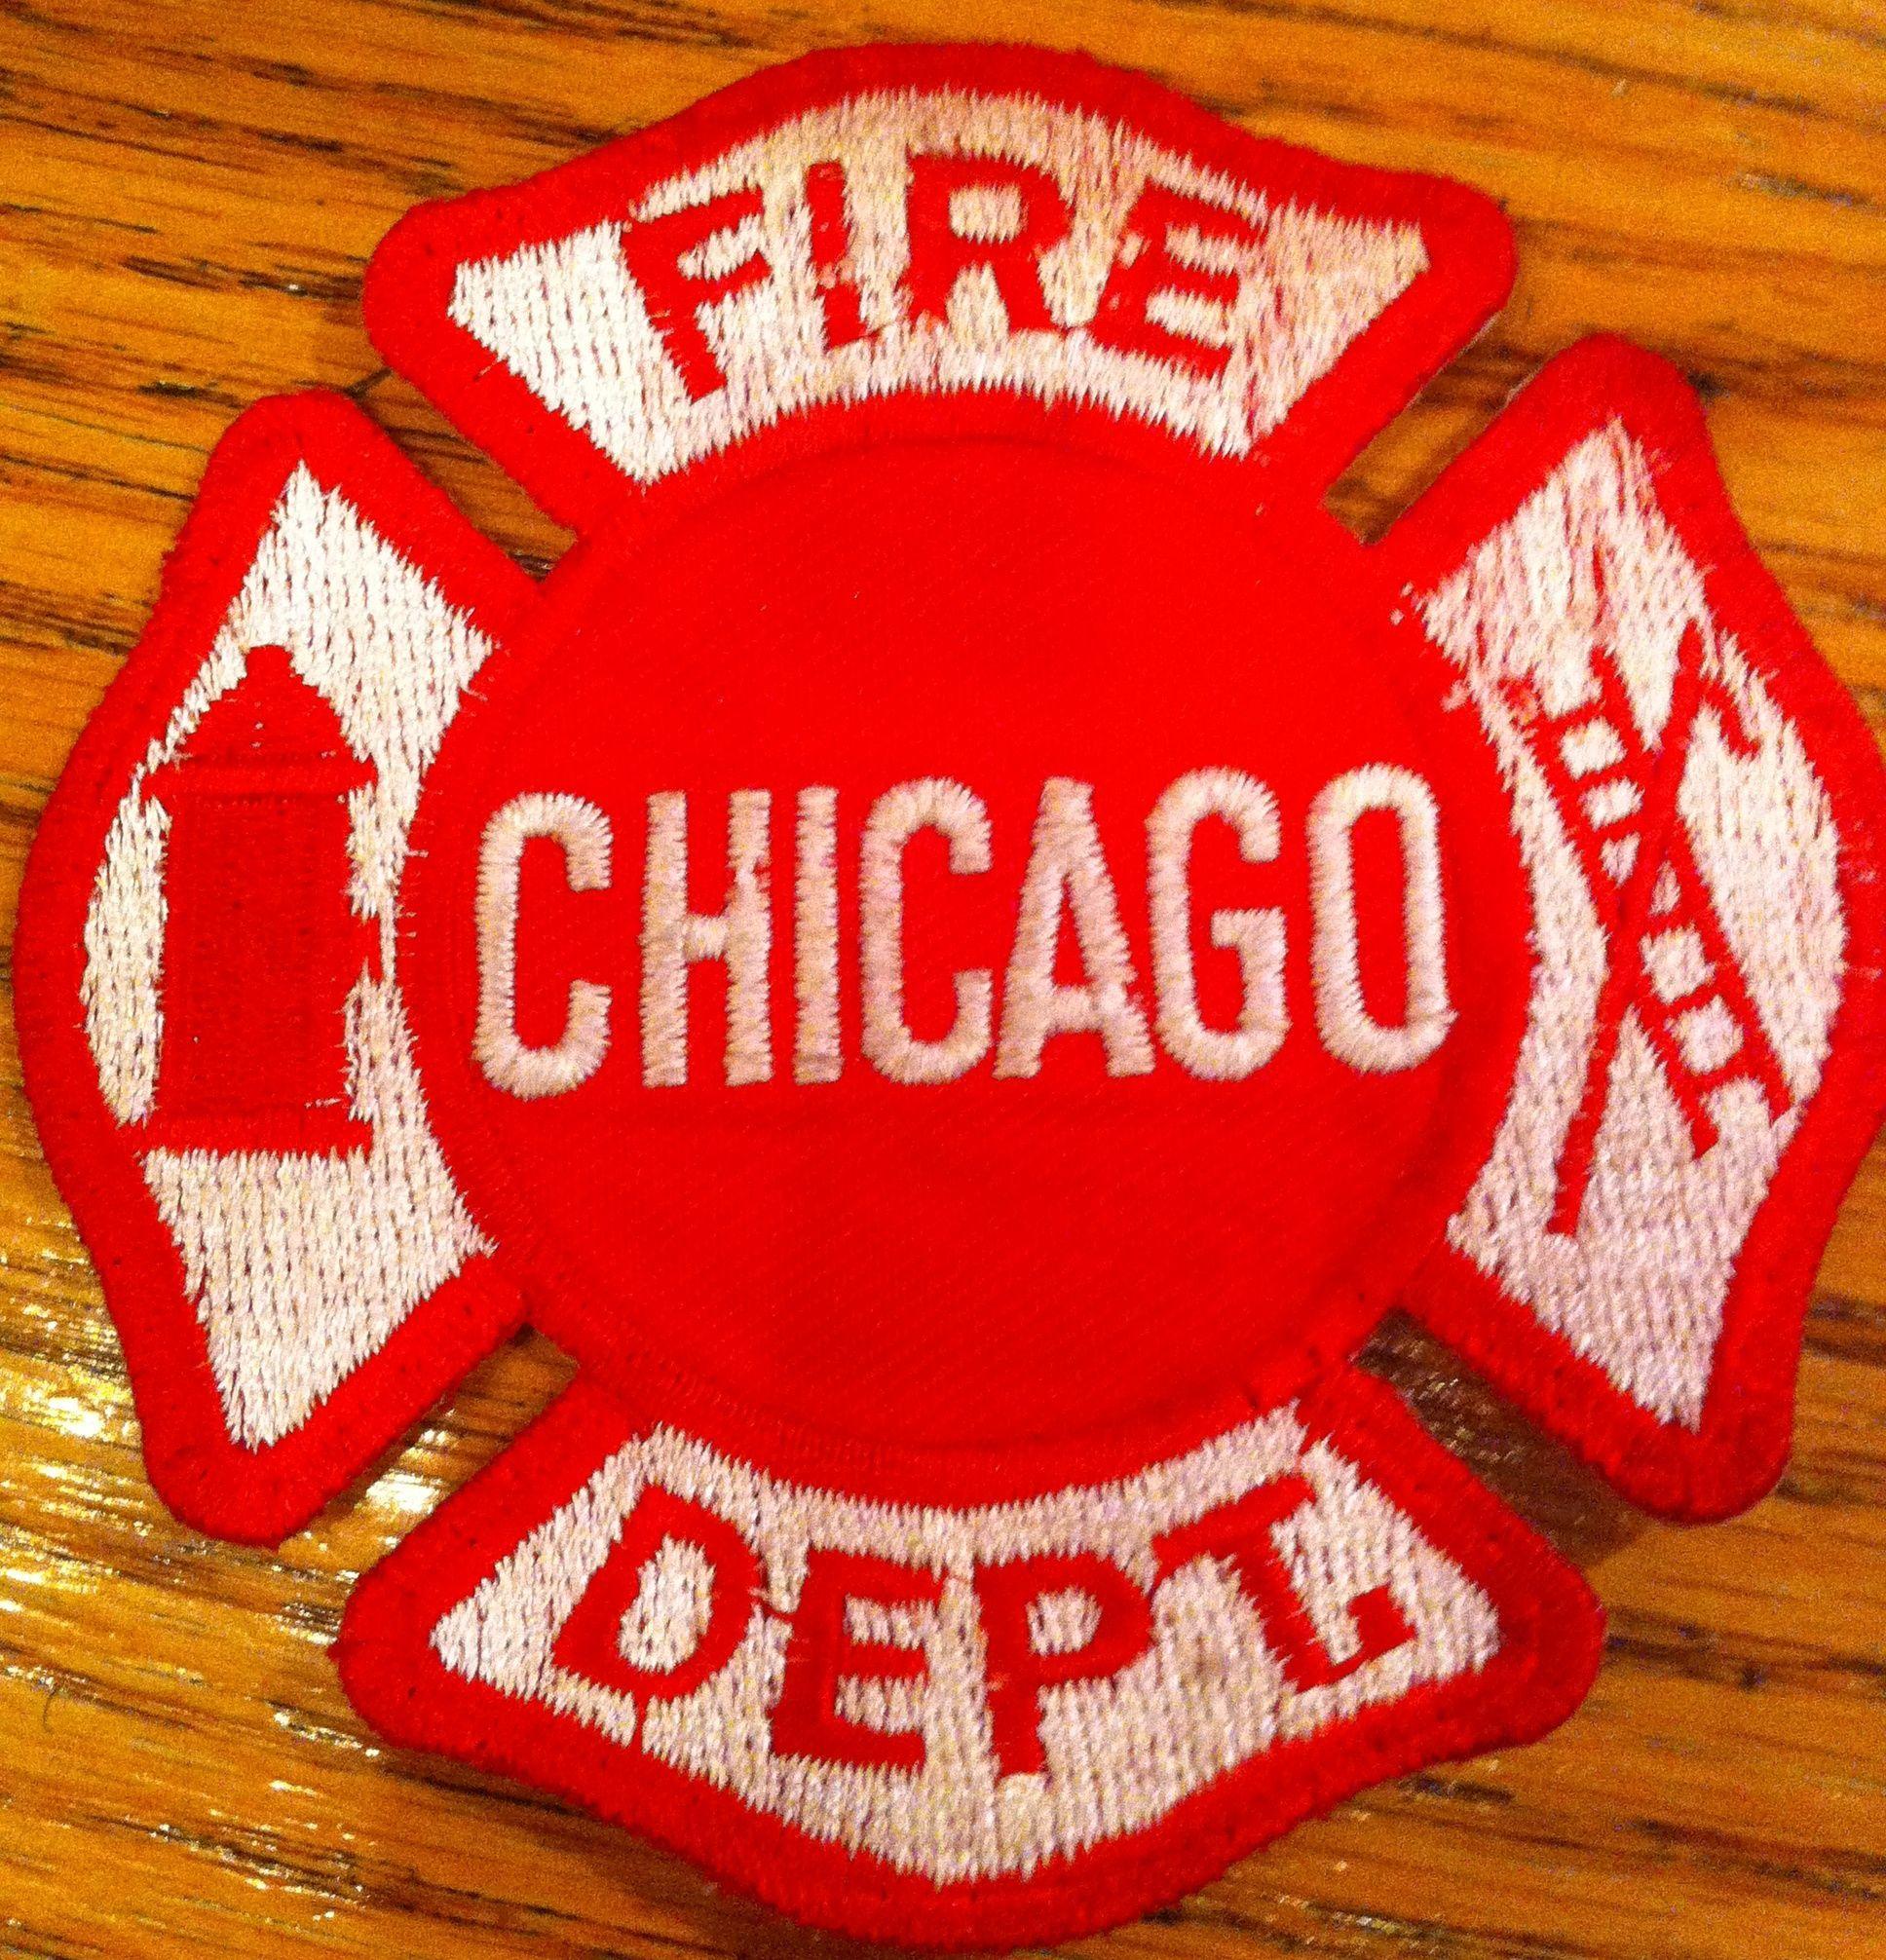 Chicago Fire Department Logo - Chicago Fire Dept Patch | Fire Patch Collection | Fire dept, Chicago ...